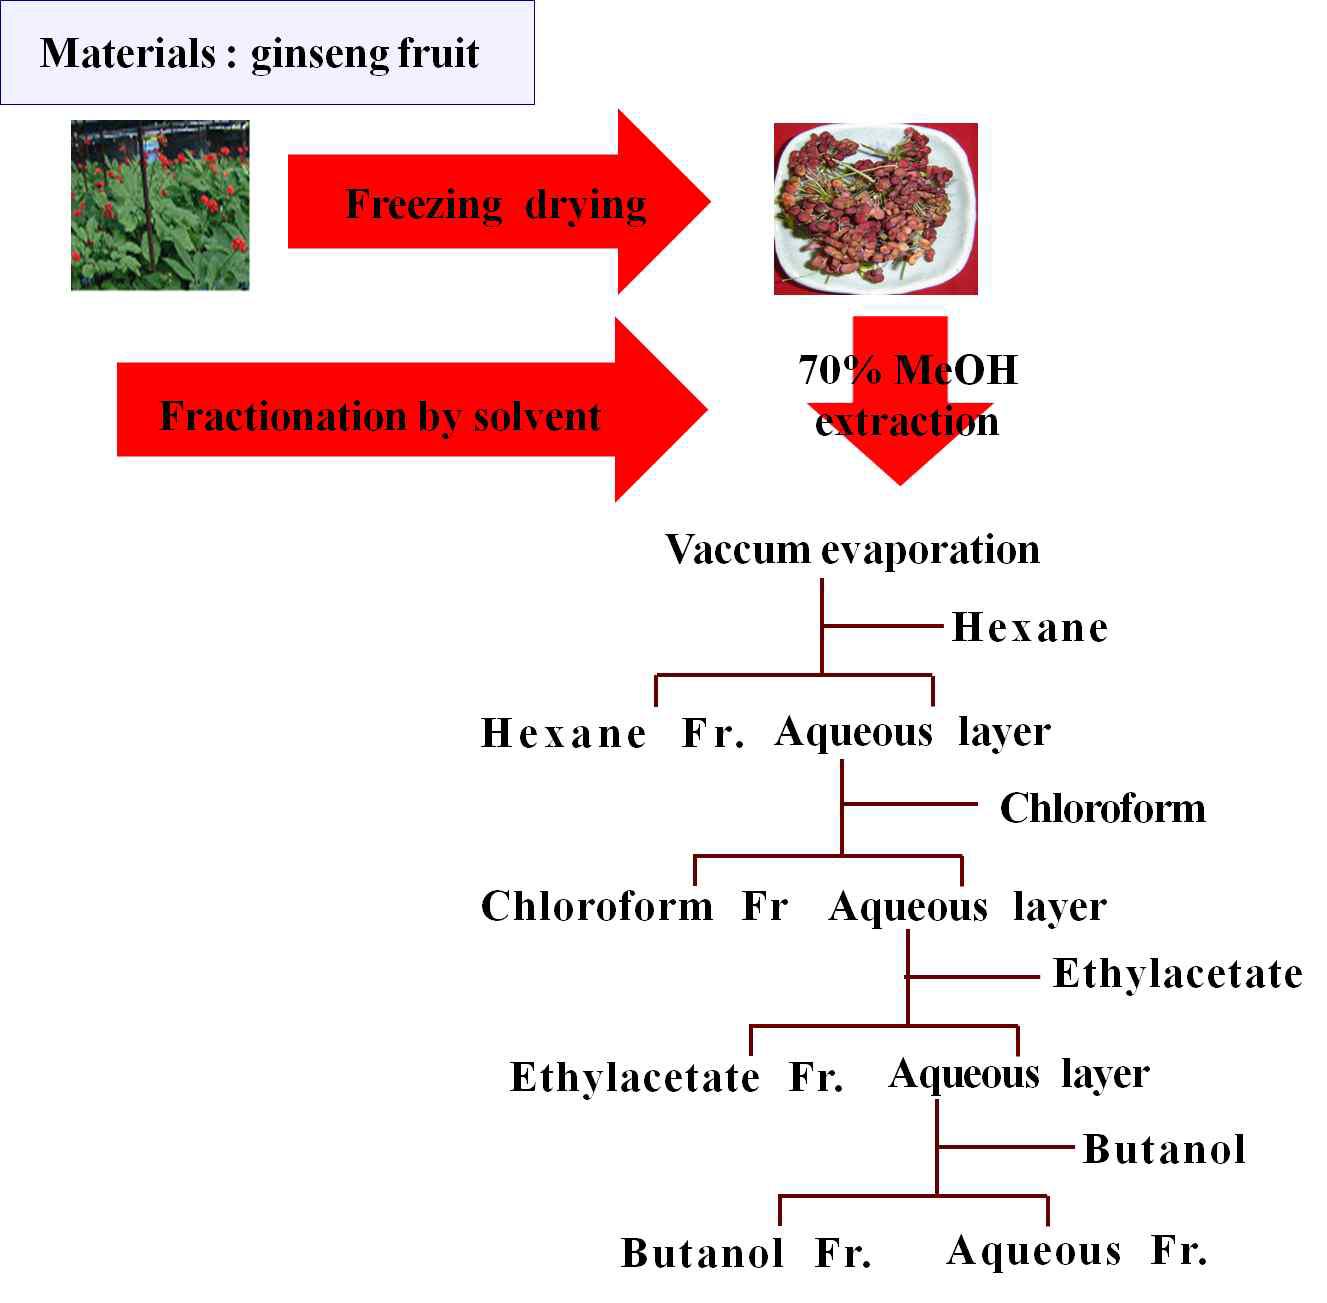 Solvent fractionation procedure of ginseng fruit.